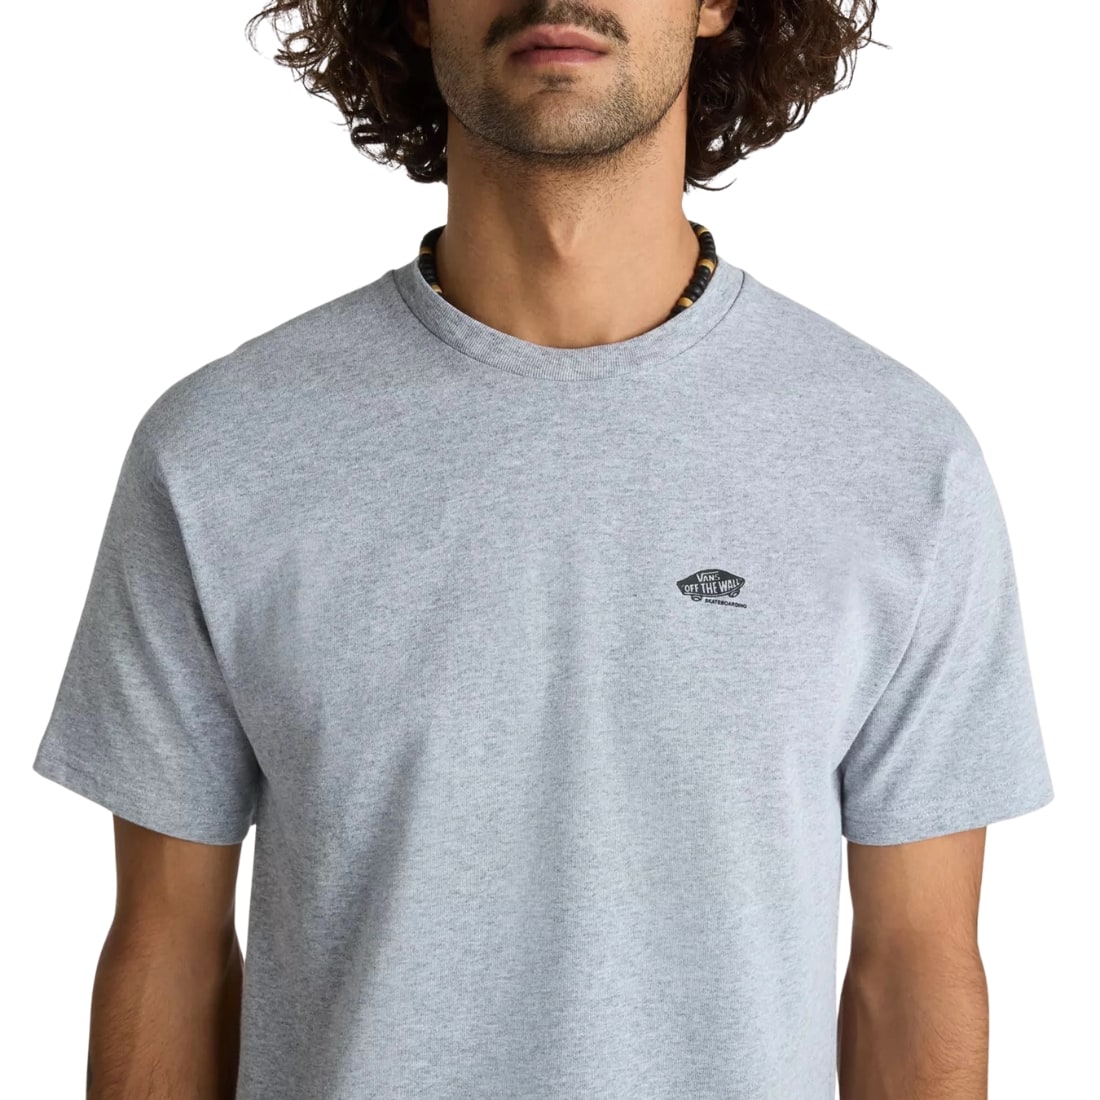 Vans Skate Classics T-Shirt - Grey Heather - Mens Graphic T-Shirt by Vans